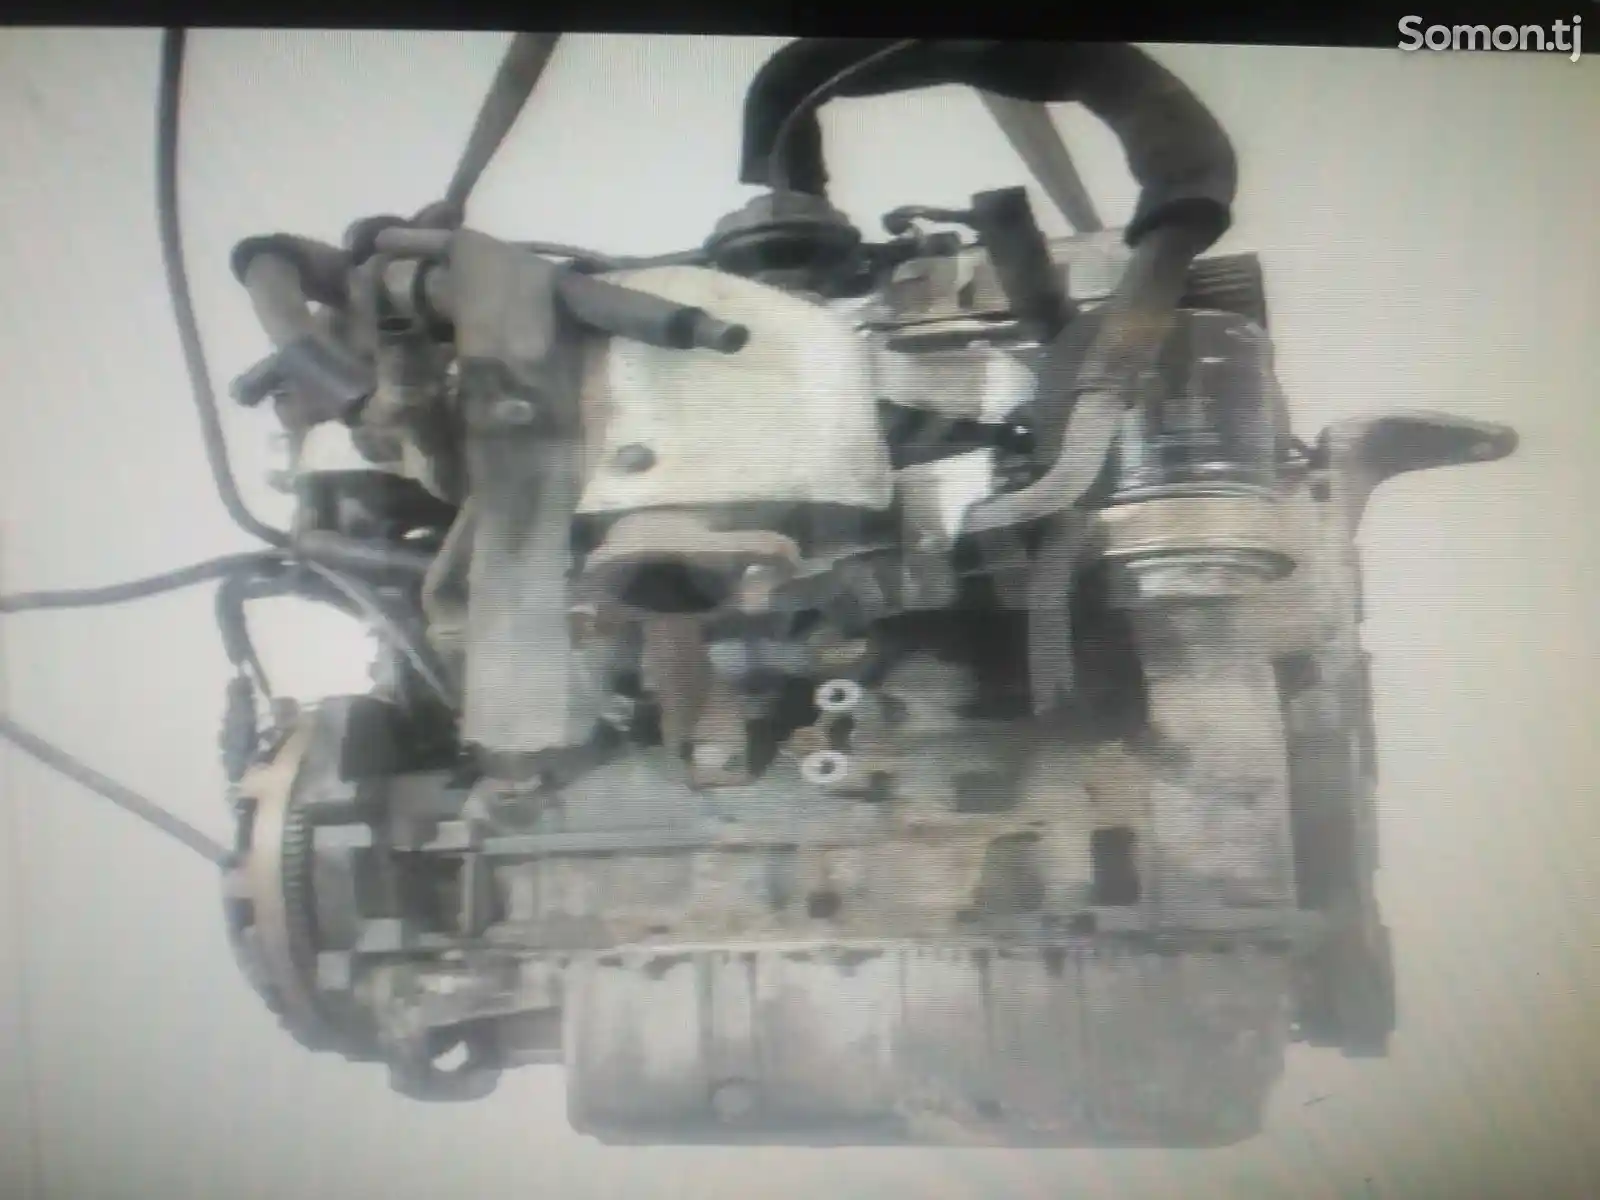 Двигатель Hyundai Santa Fe 2000-2005